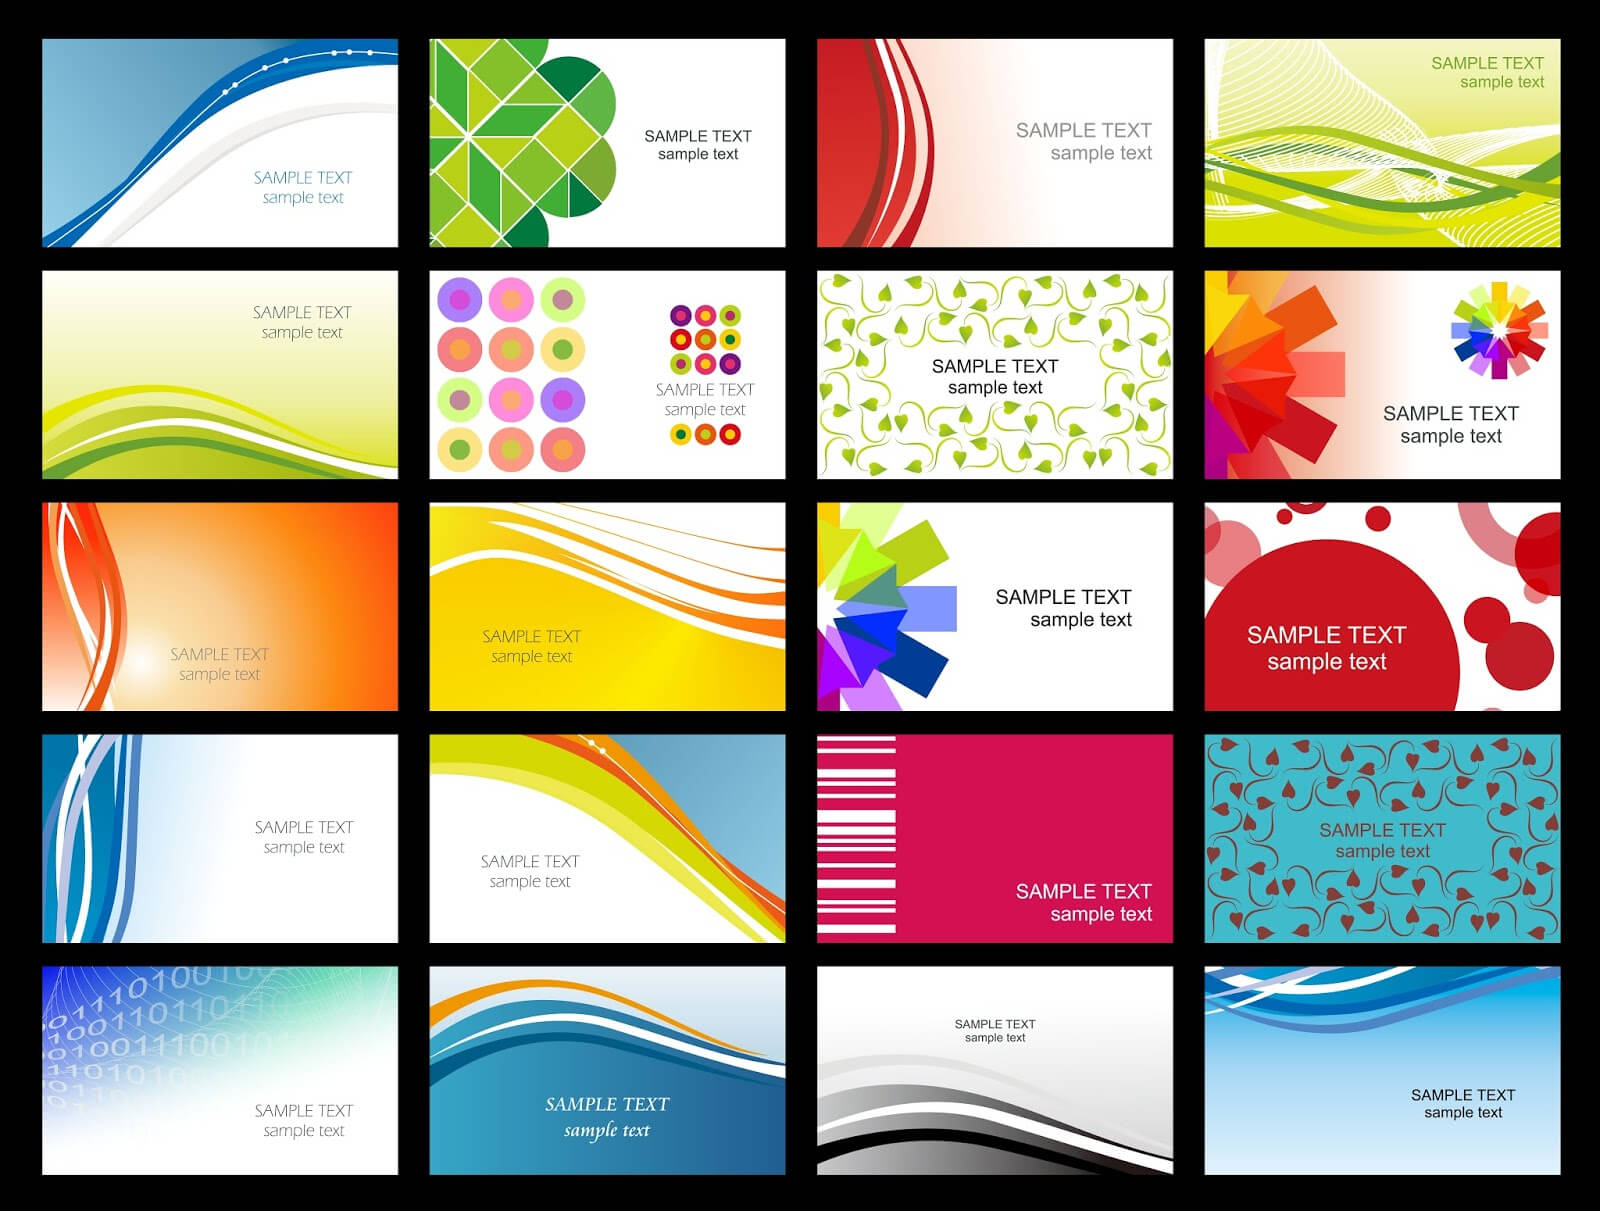 Printable Business Card Template – Business Card Tips Regarding Business Card Template For Google Docs